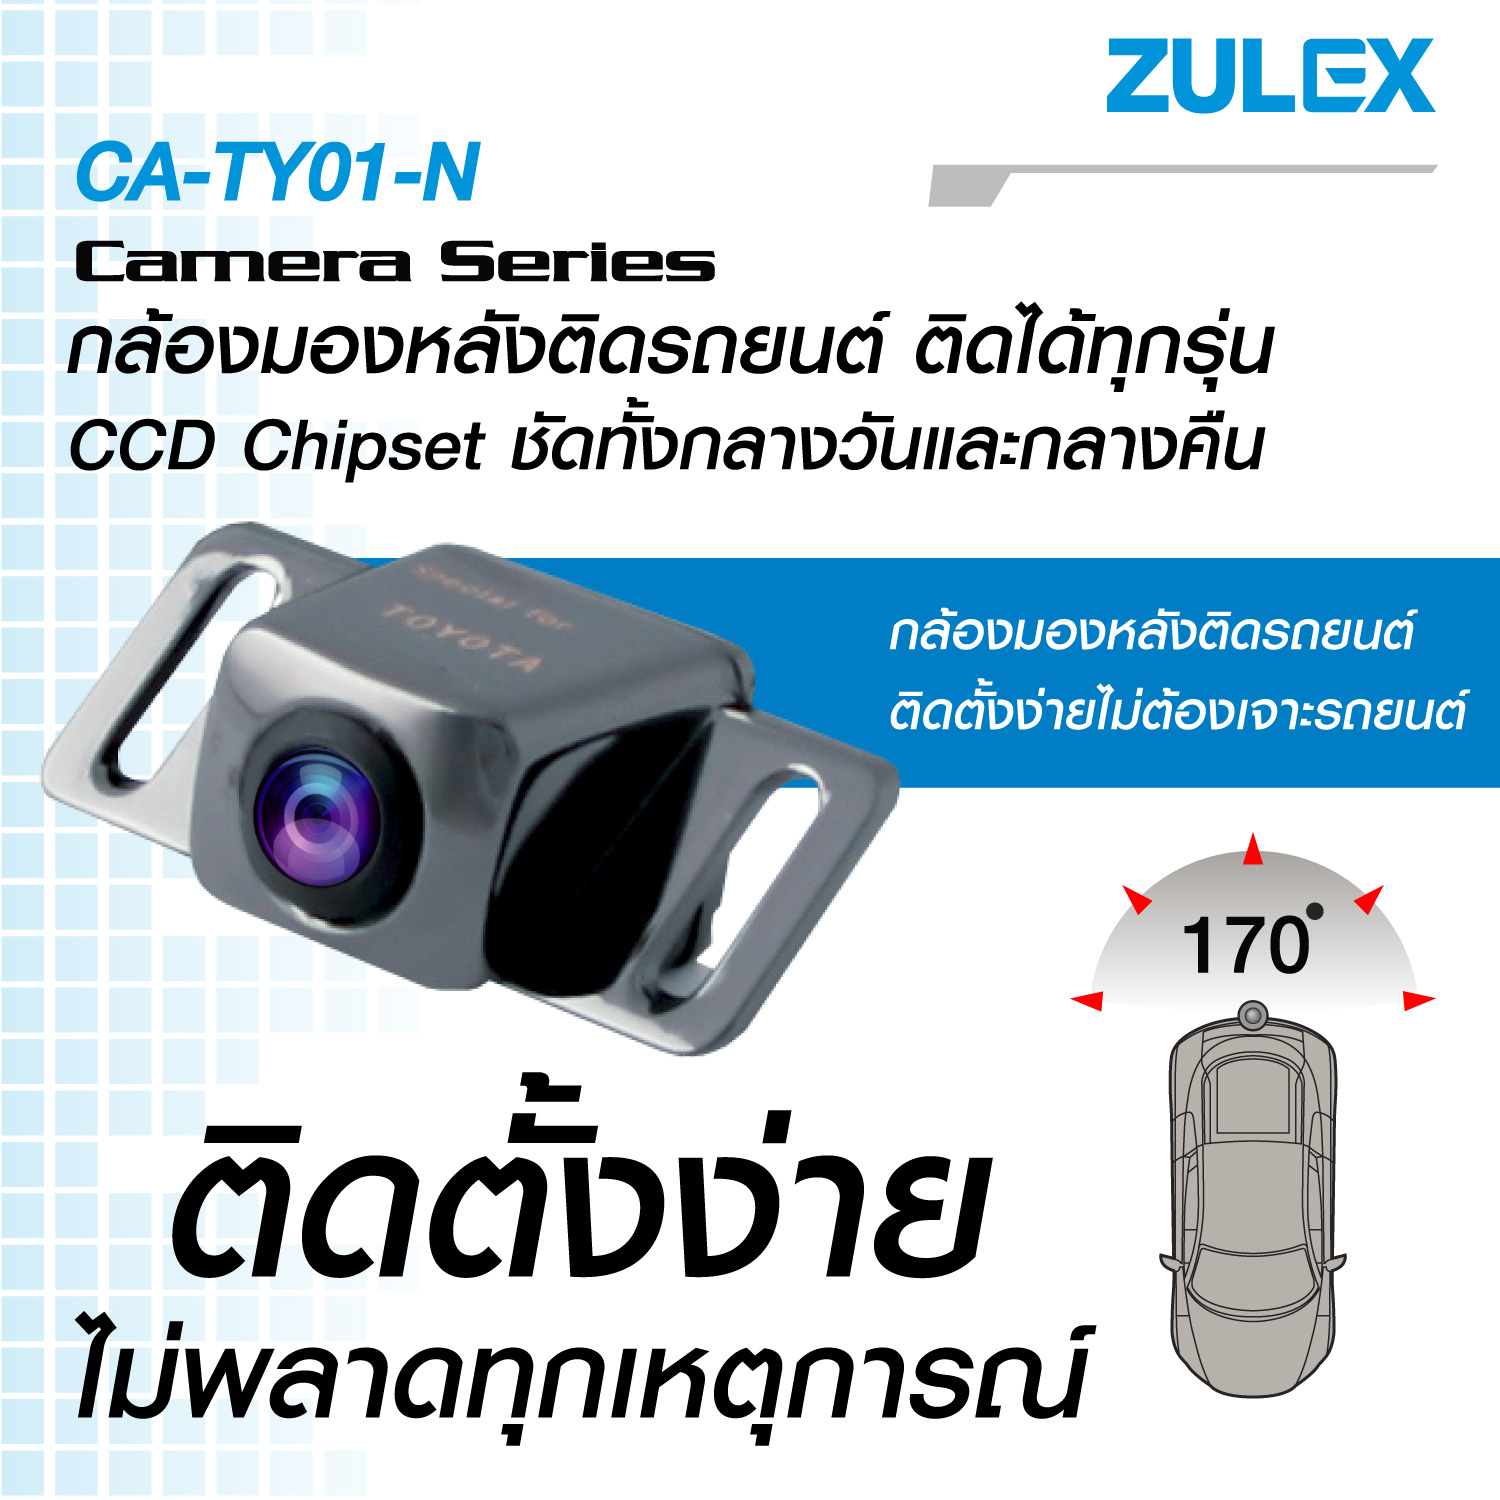 zulex กล้องติดรถยนต์ universal และเฉพาะรุ่น ca-tyo1 chipset ccd มุมมอง 170 องศา ใส่ได้กับรถยนต์ทุกรุ่น ทุกยี่ห้อ ภาพคมชัดใสแจ๋ว ทั้งกลางวันและกลางคื